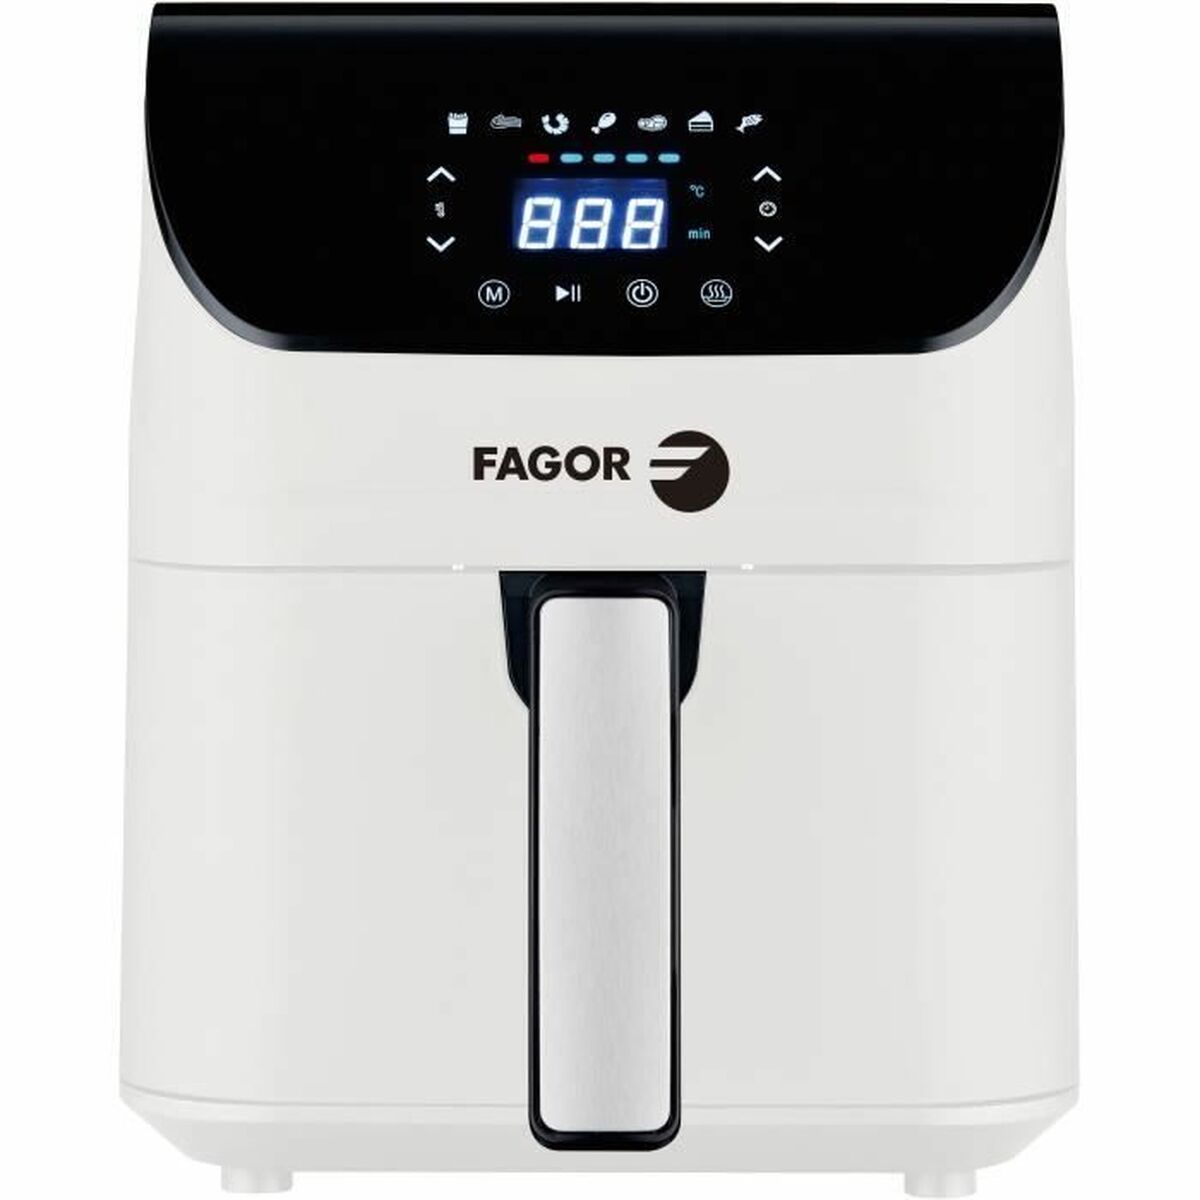 Heißluftfritteuse Fagor FG5060 - CA International  